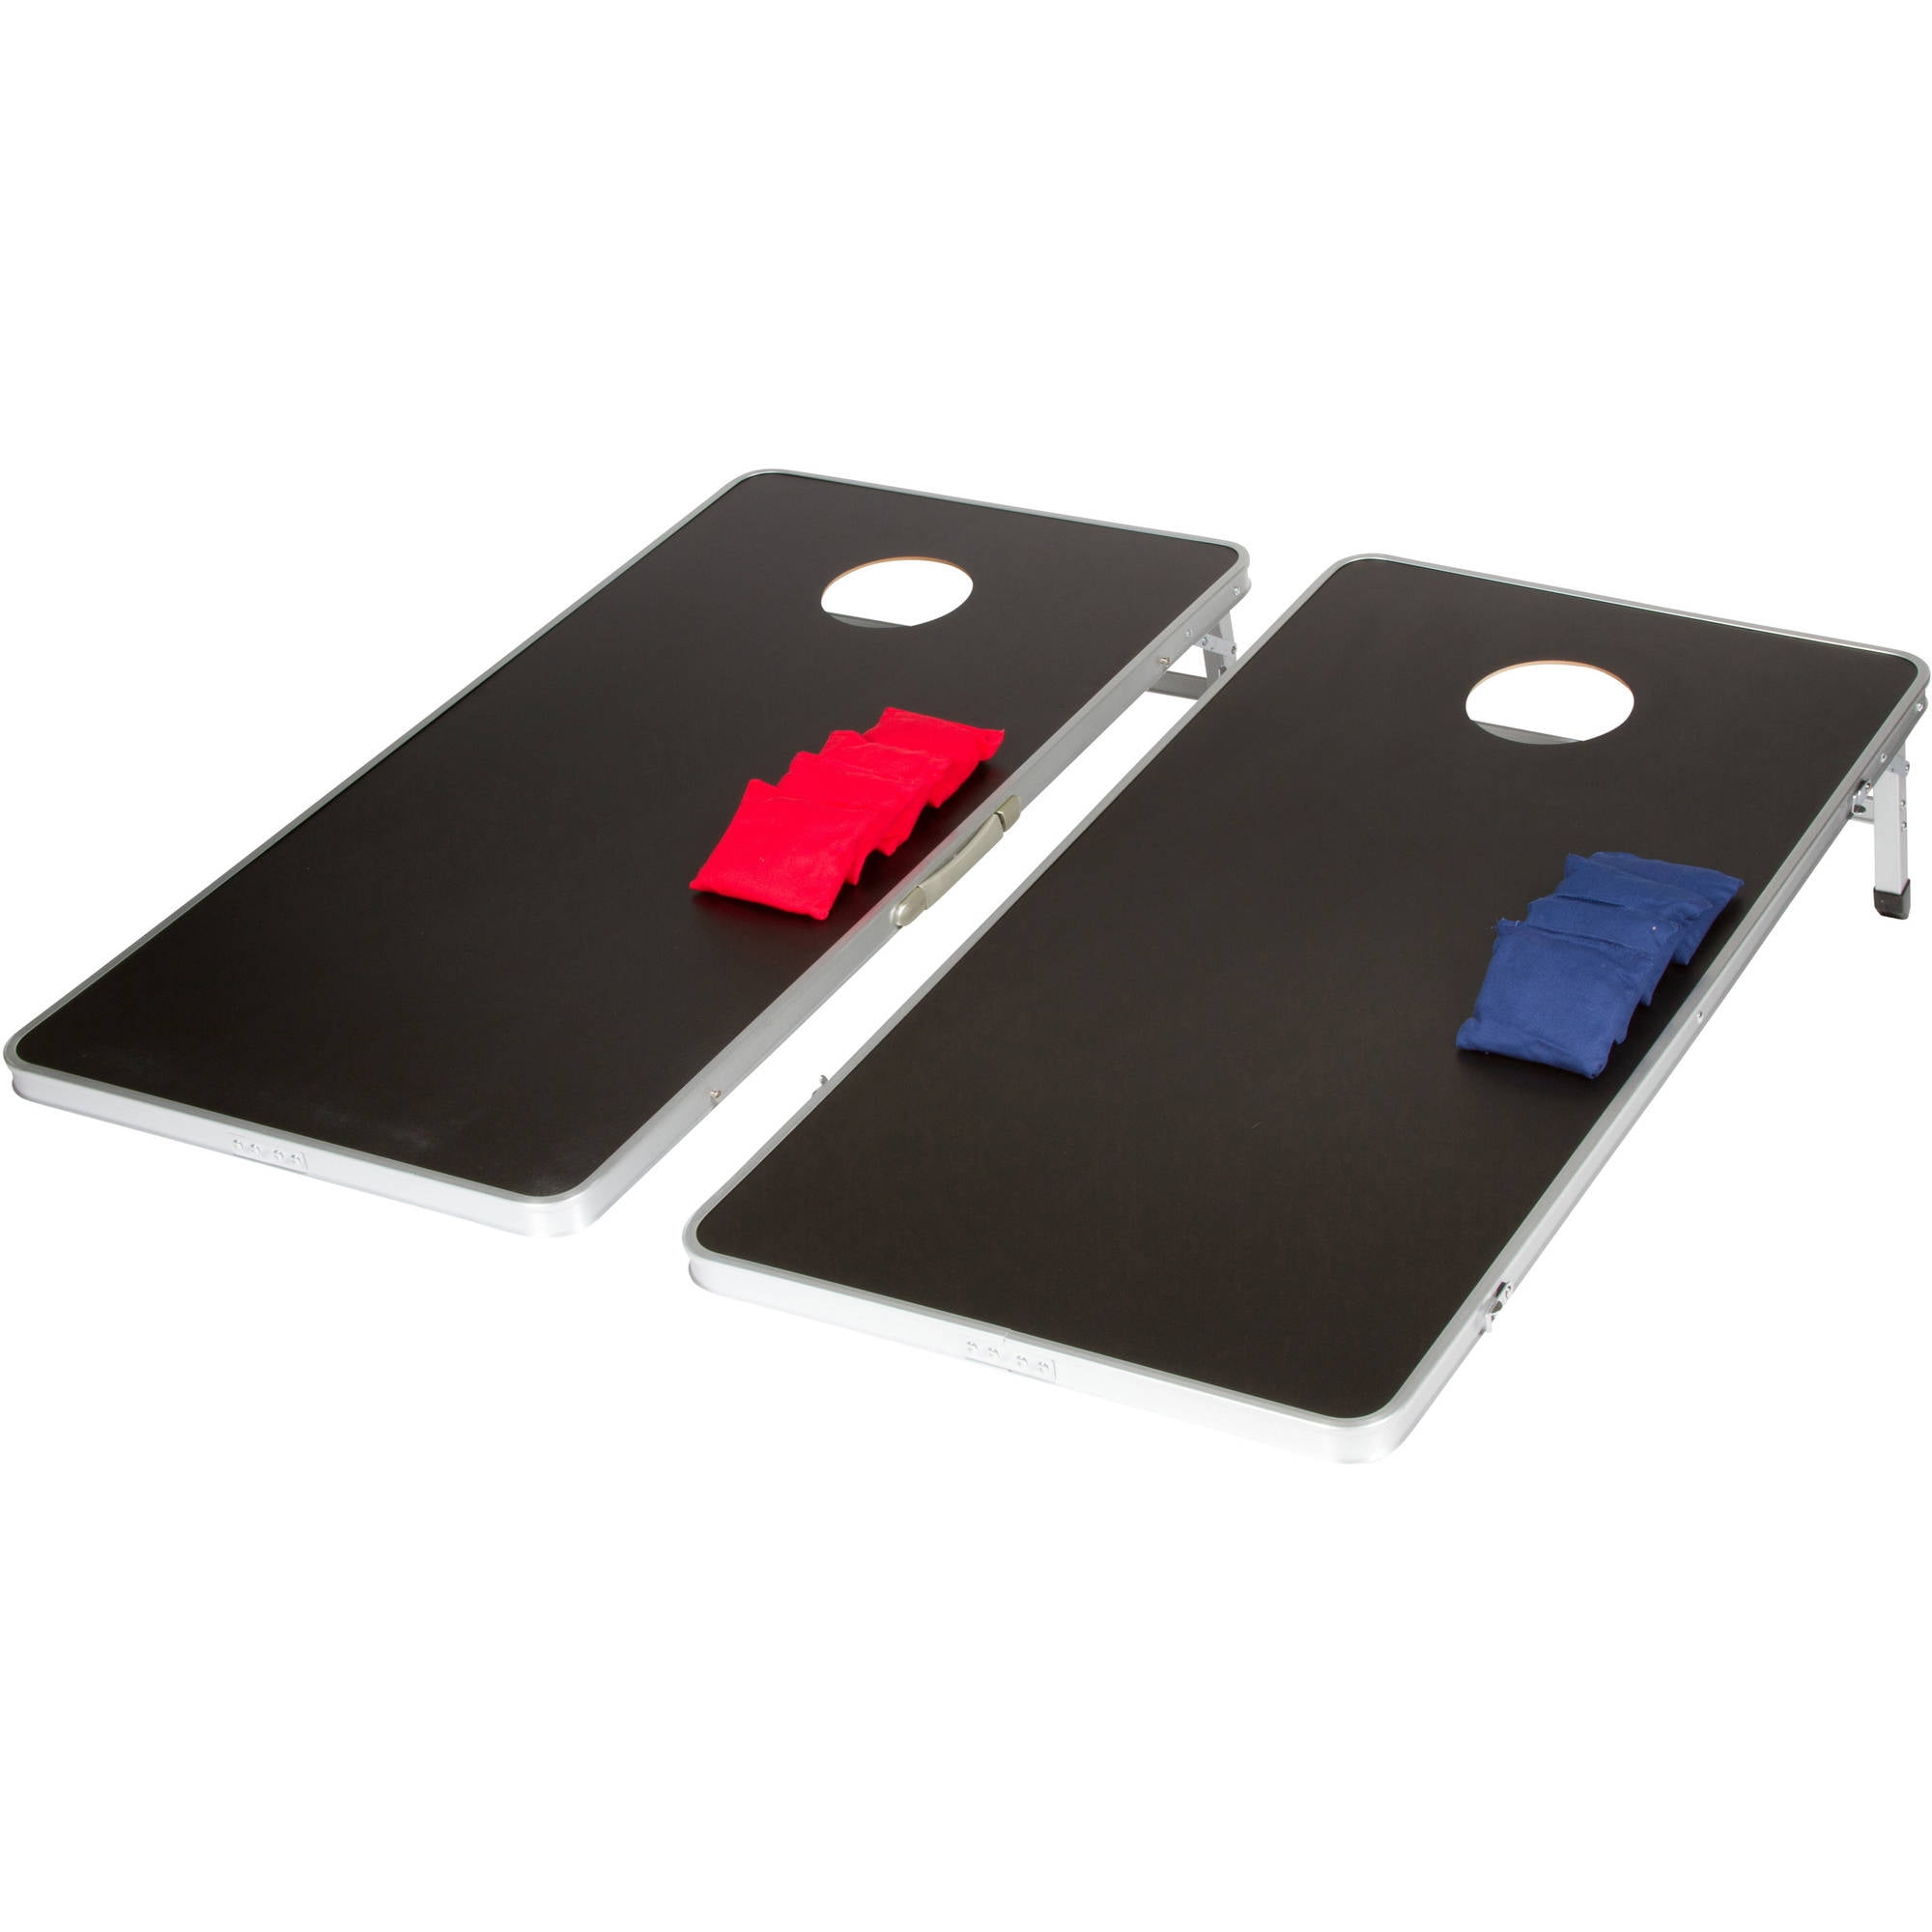 F2C Portable Aluminum/PVC Framed Bean Bag Cornhole Toss Game Set Boards 3FT 2FT/4FT 2FT W/ 8 Bean Bags and Carrying Case Original Black Classic Red& Blue to Choose 3FT2FT Black Aluminum